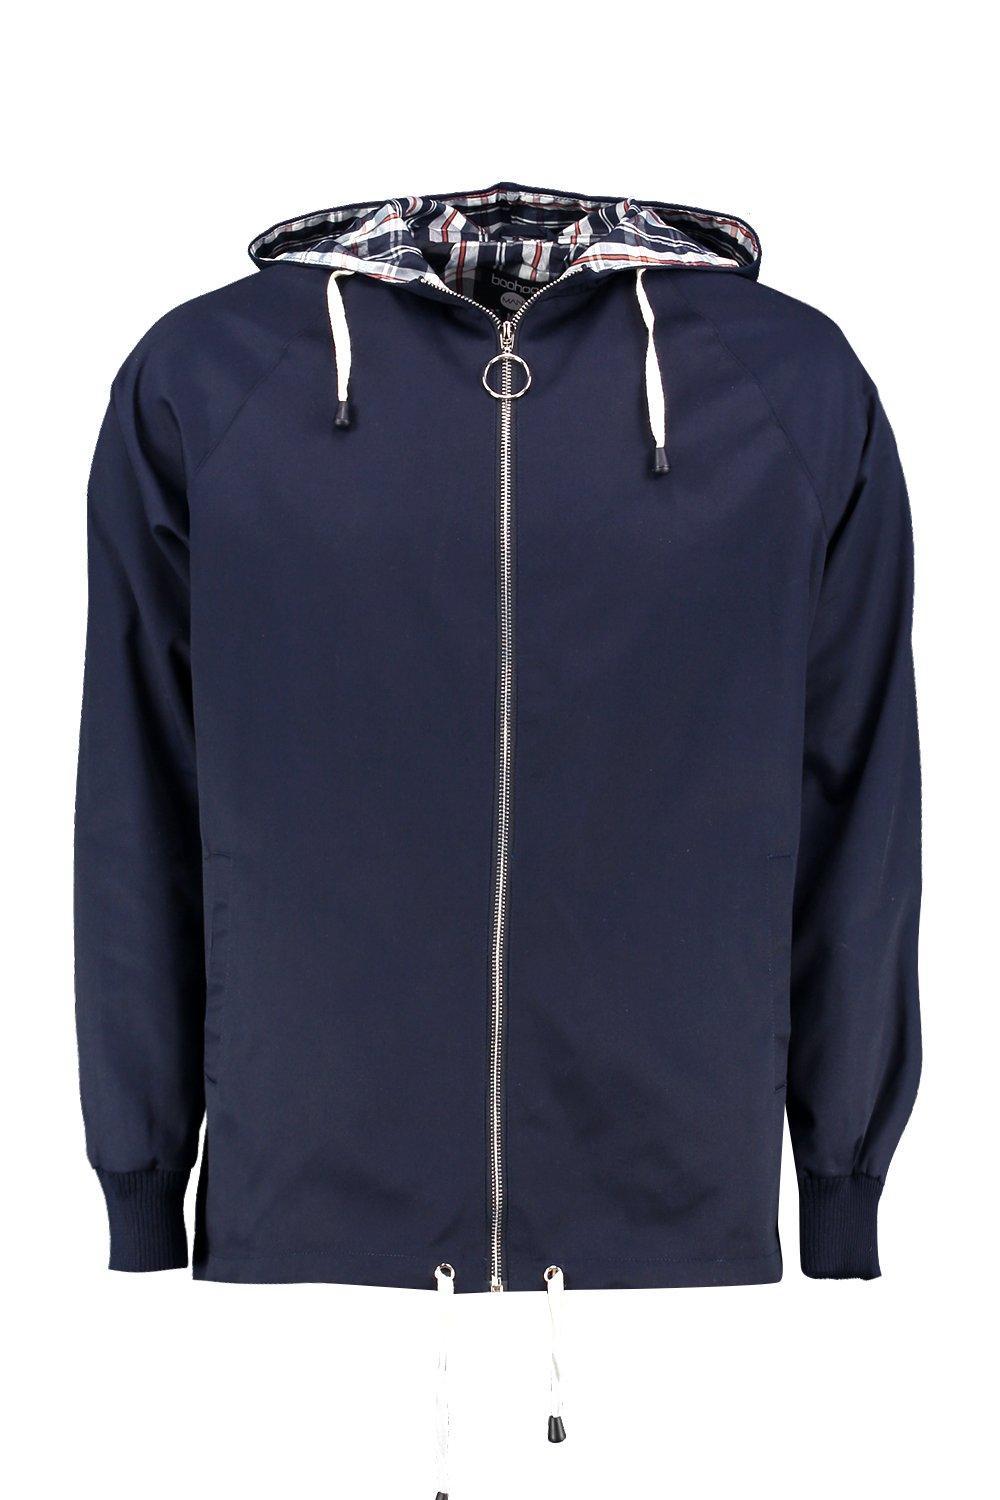 Download Lyst - Boohoo Hooded Cotton Harrington Jacket in Blue for Men